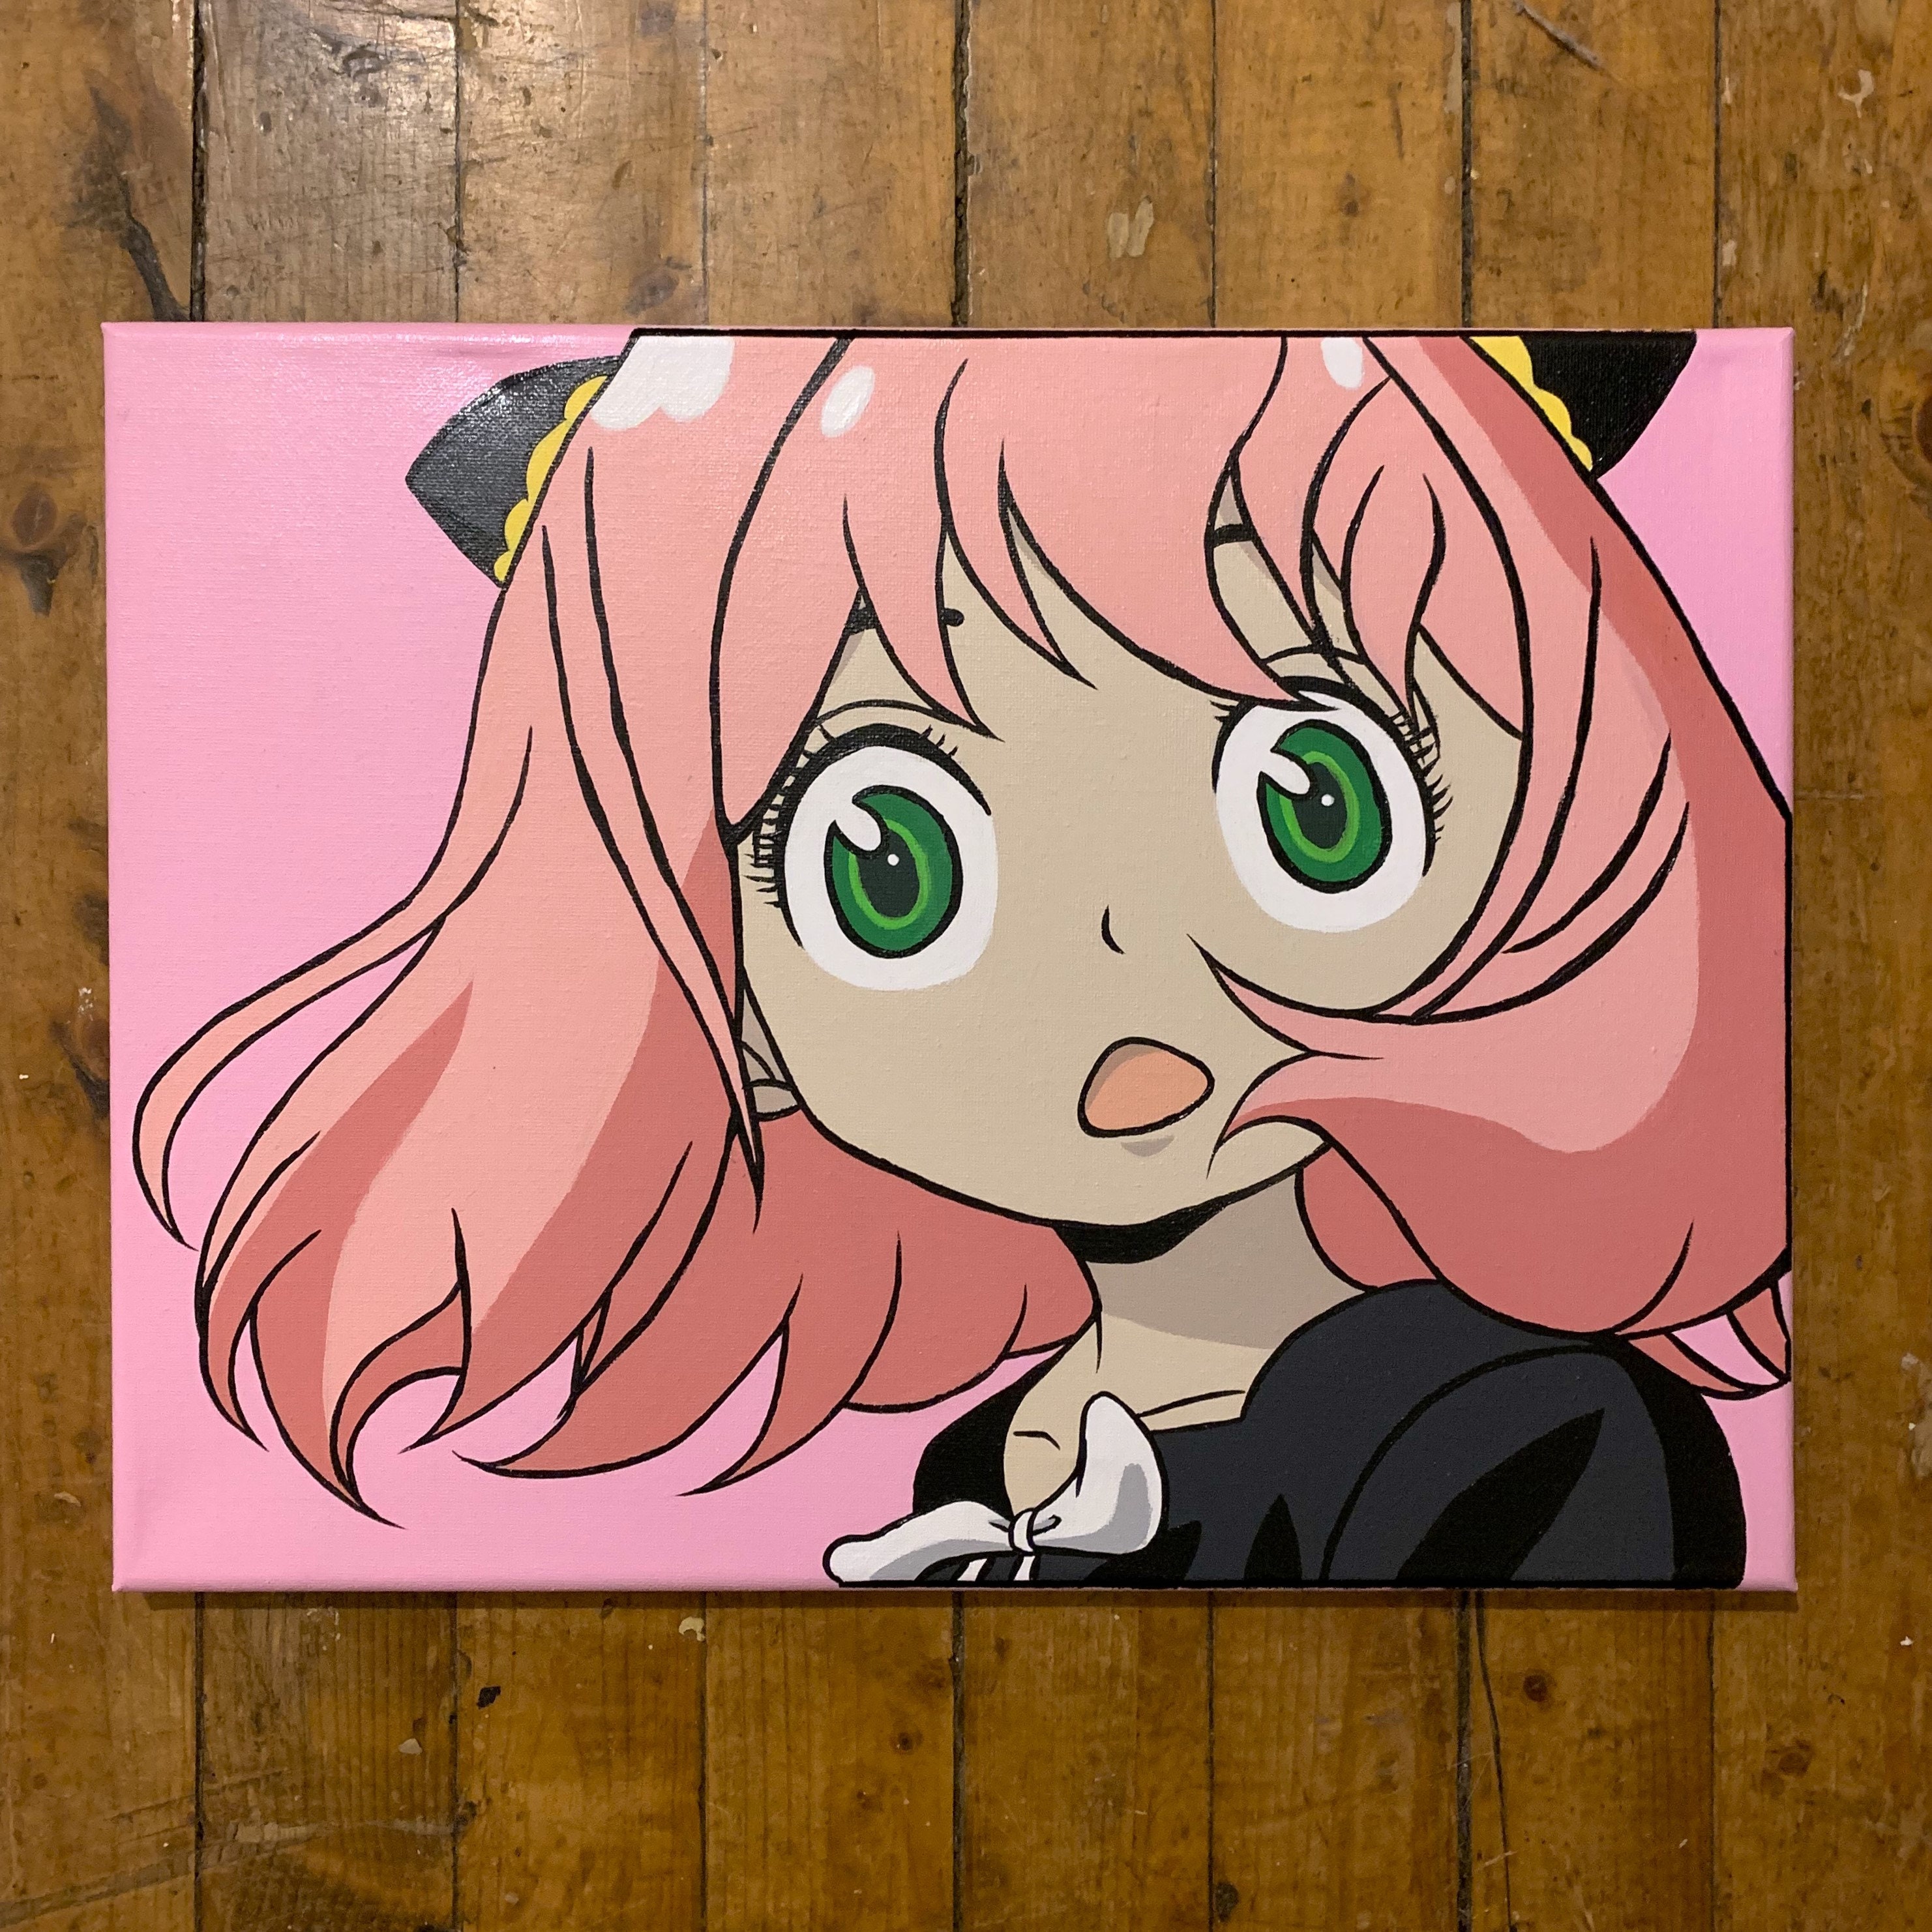 Anime Anime painting Acrylic 7 inch x 4 inch Painting Price in India  Buy Anime  Anime painting Acrylic 7 inch x 4 inch Painting online at Flipkartcom